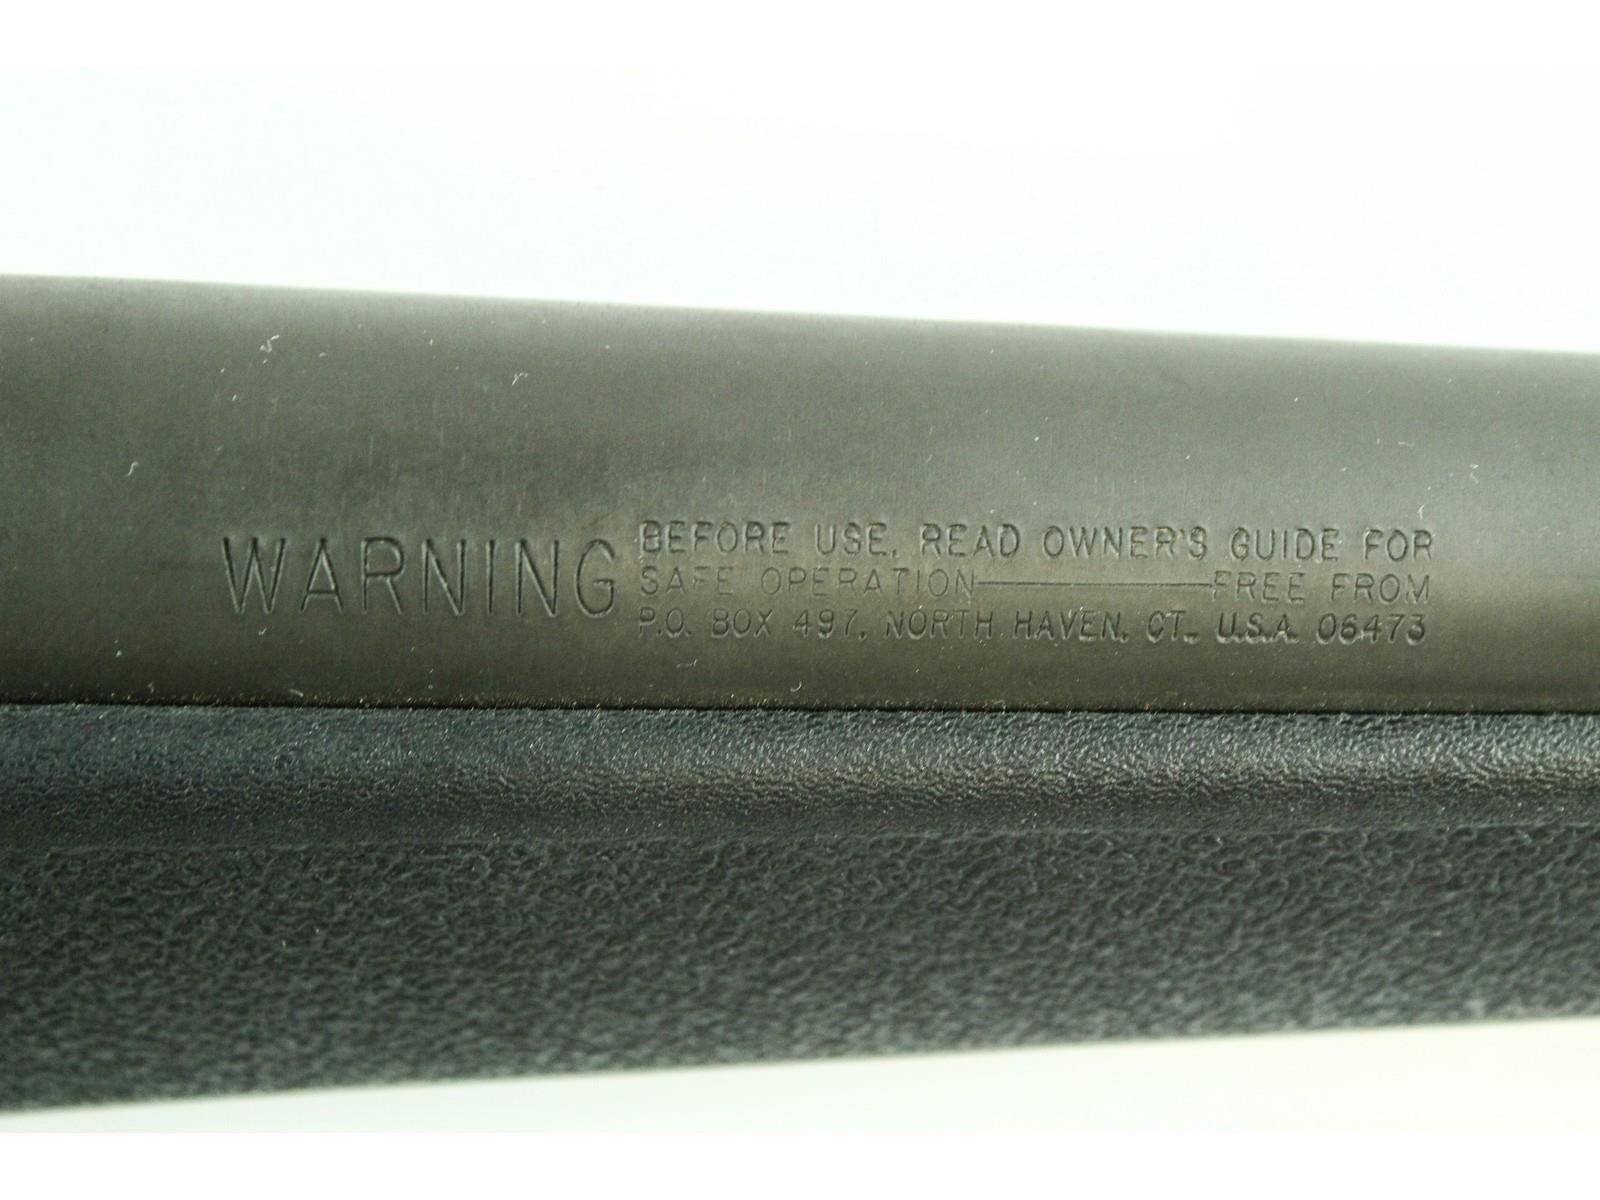 Mossberg Model 695 12 Gauge Shotgun w/ Scope